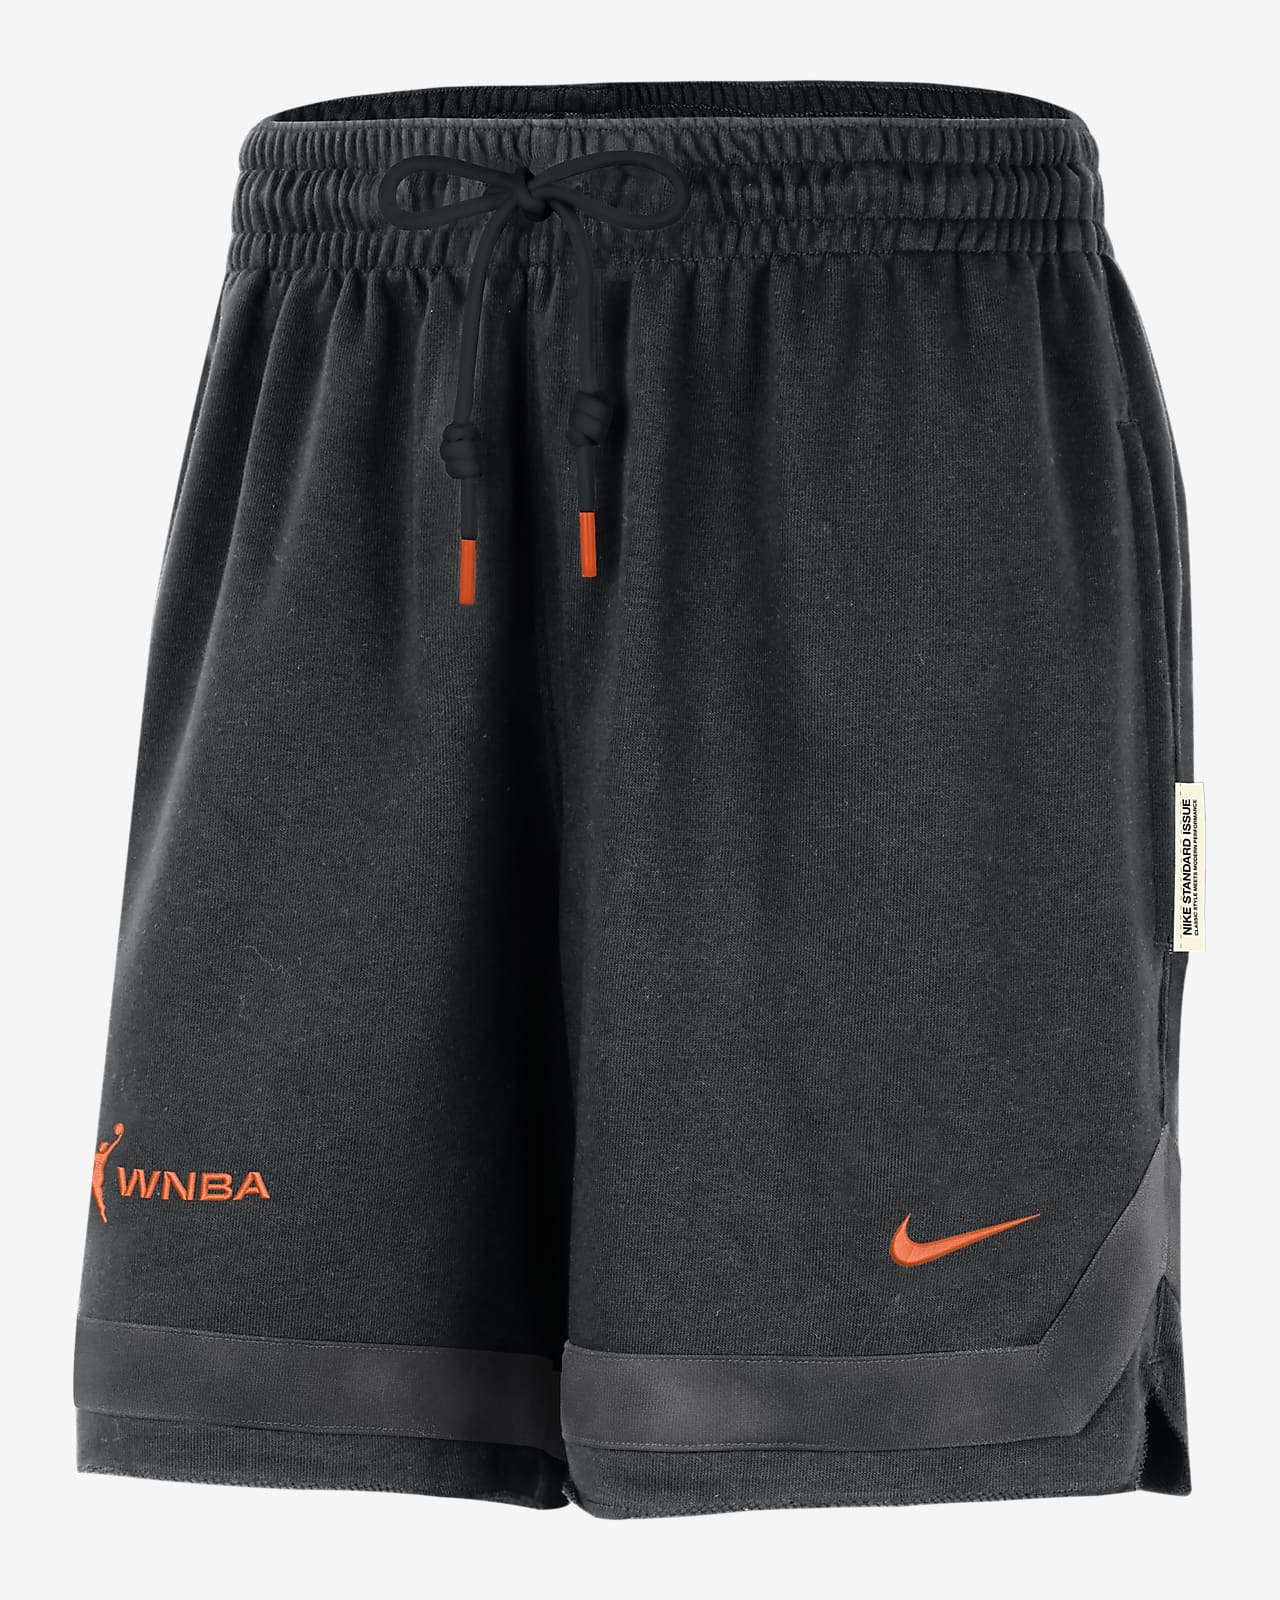 Team 13 Standard Issue Women's Nike WNBA Shorts